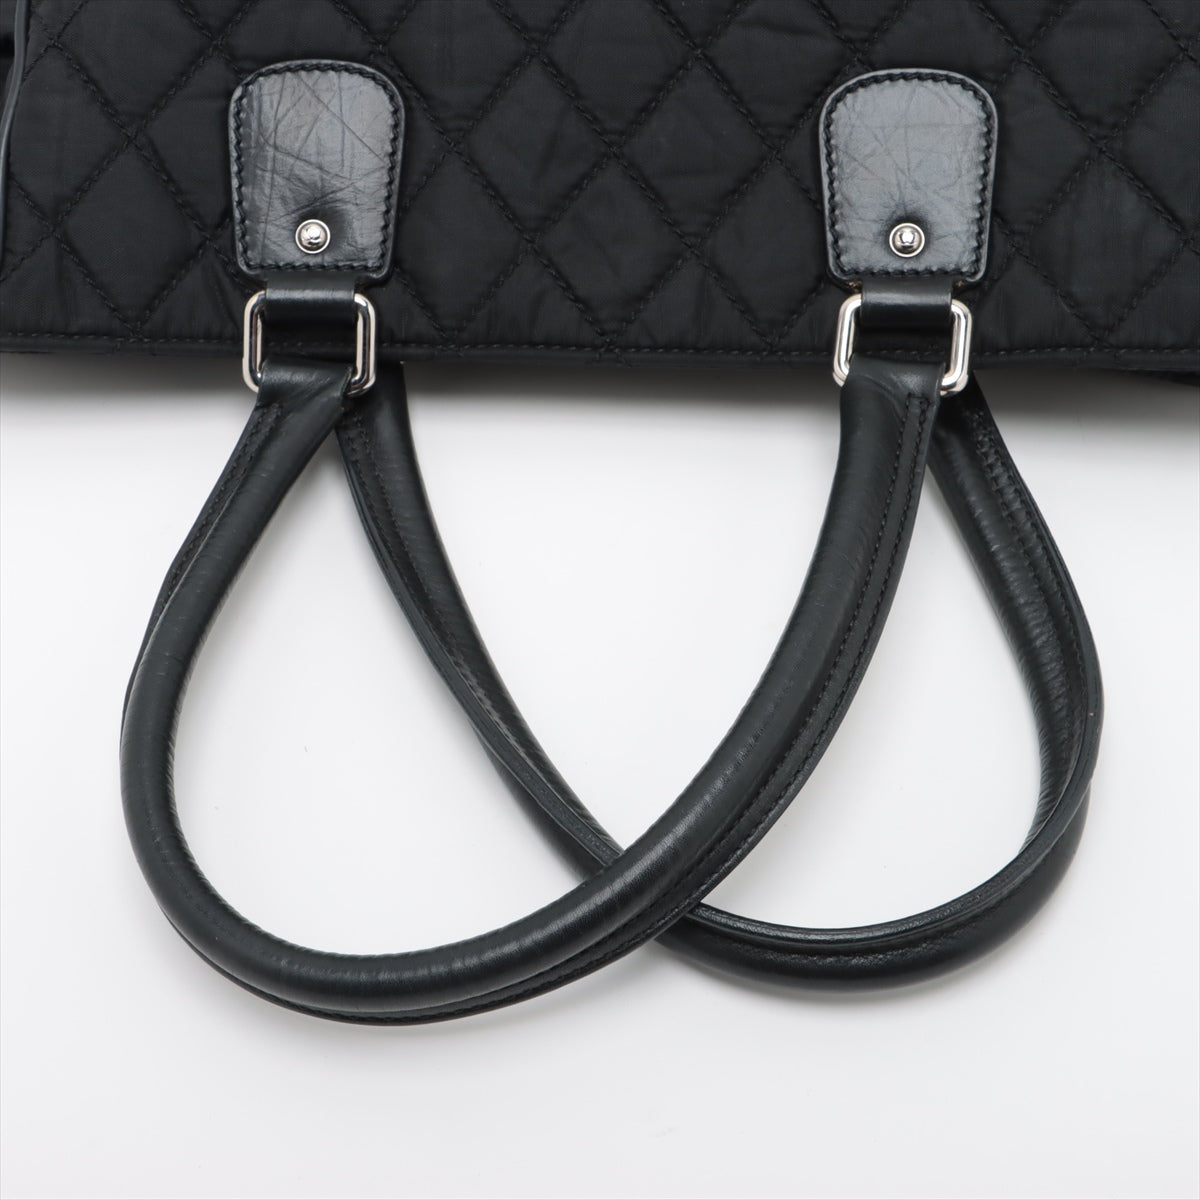 Chanel Paris New York Line Nylon & leather Tote bag Black Silver Metal fittings 12XXXXXX